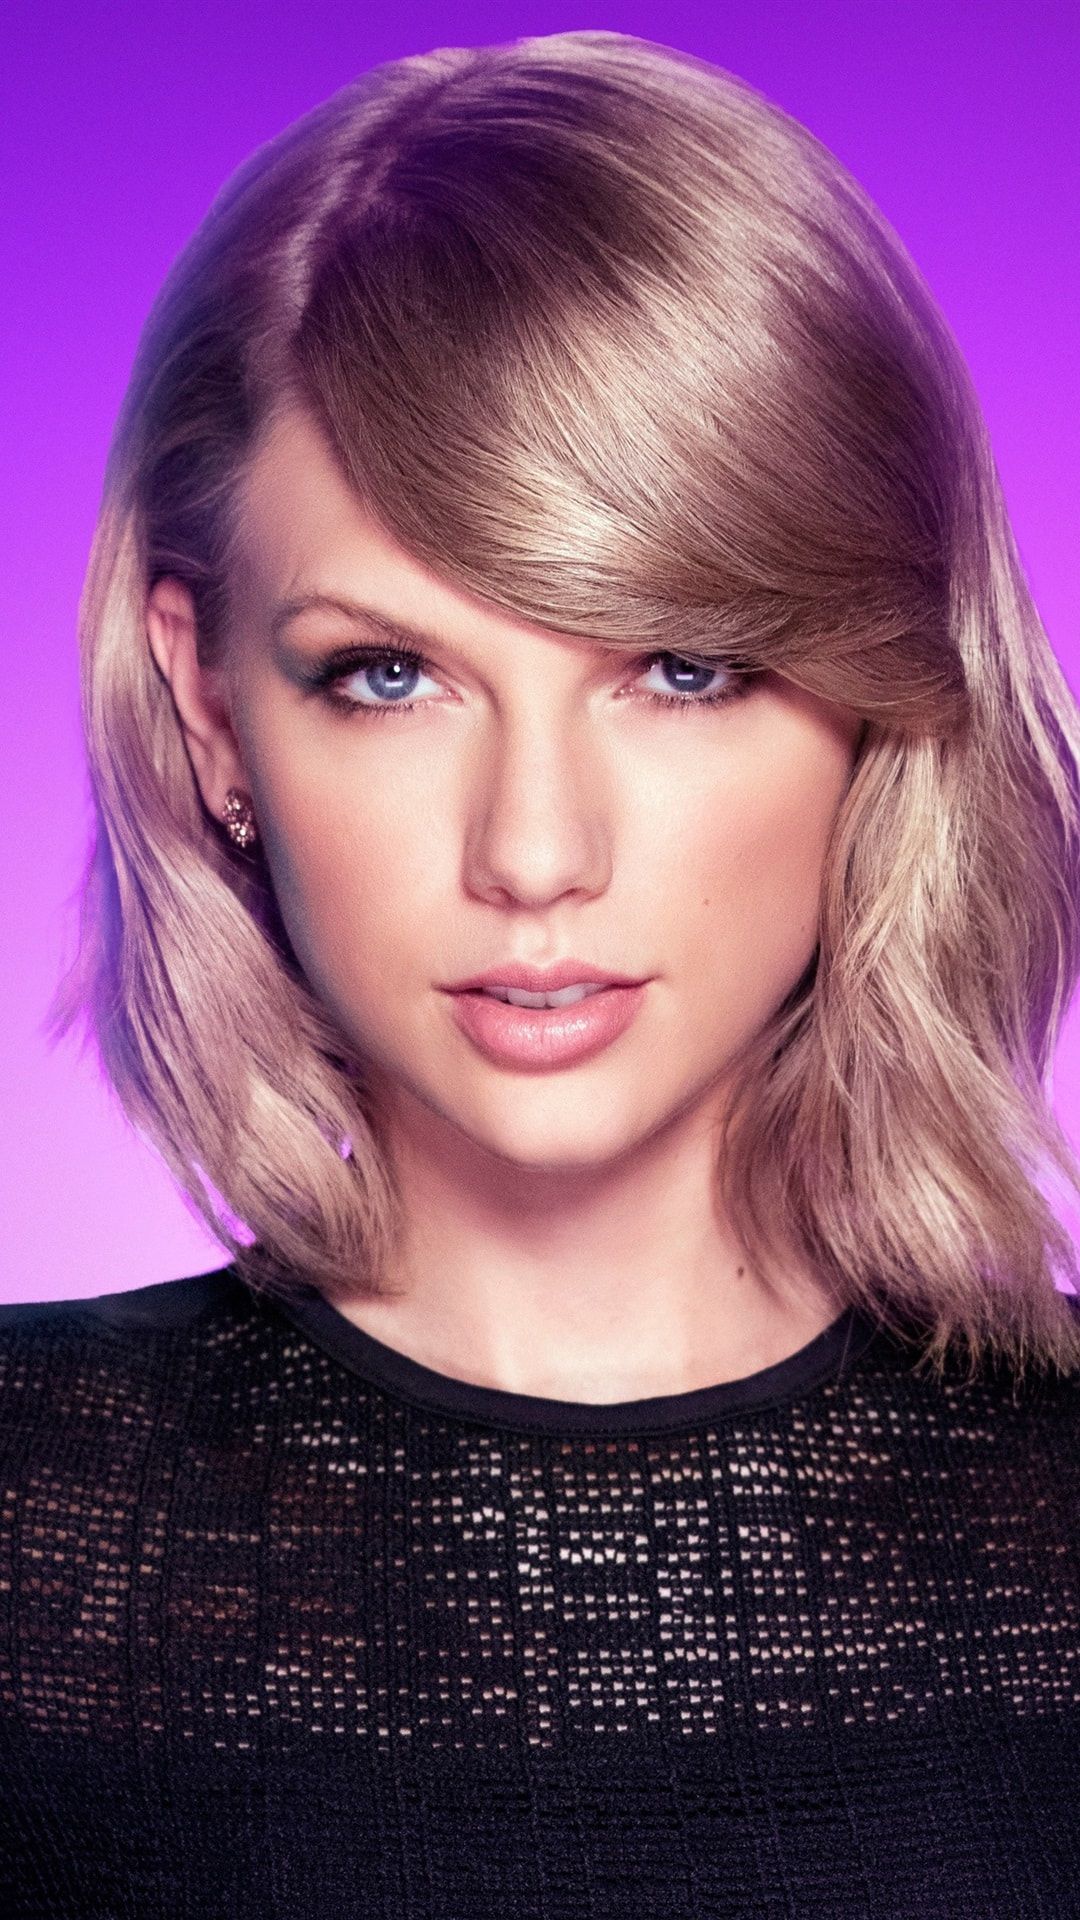 Beautiful Taylor Swift HD Wallpaper Android #beautiful #taylor